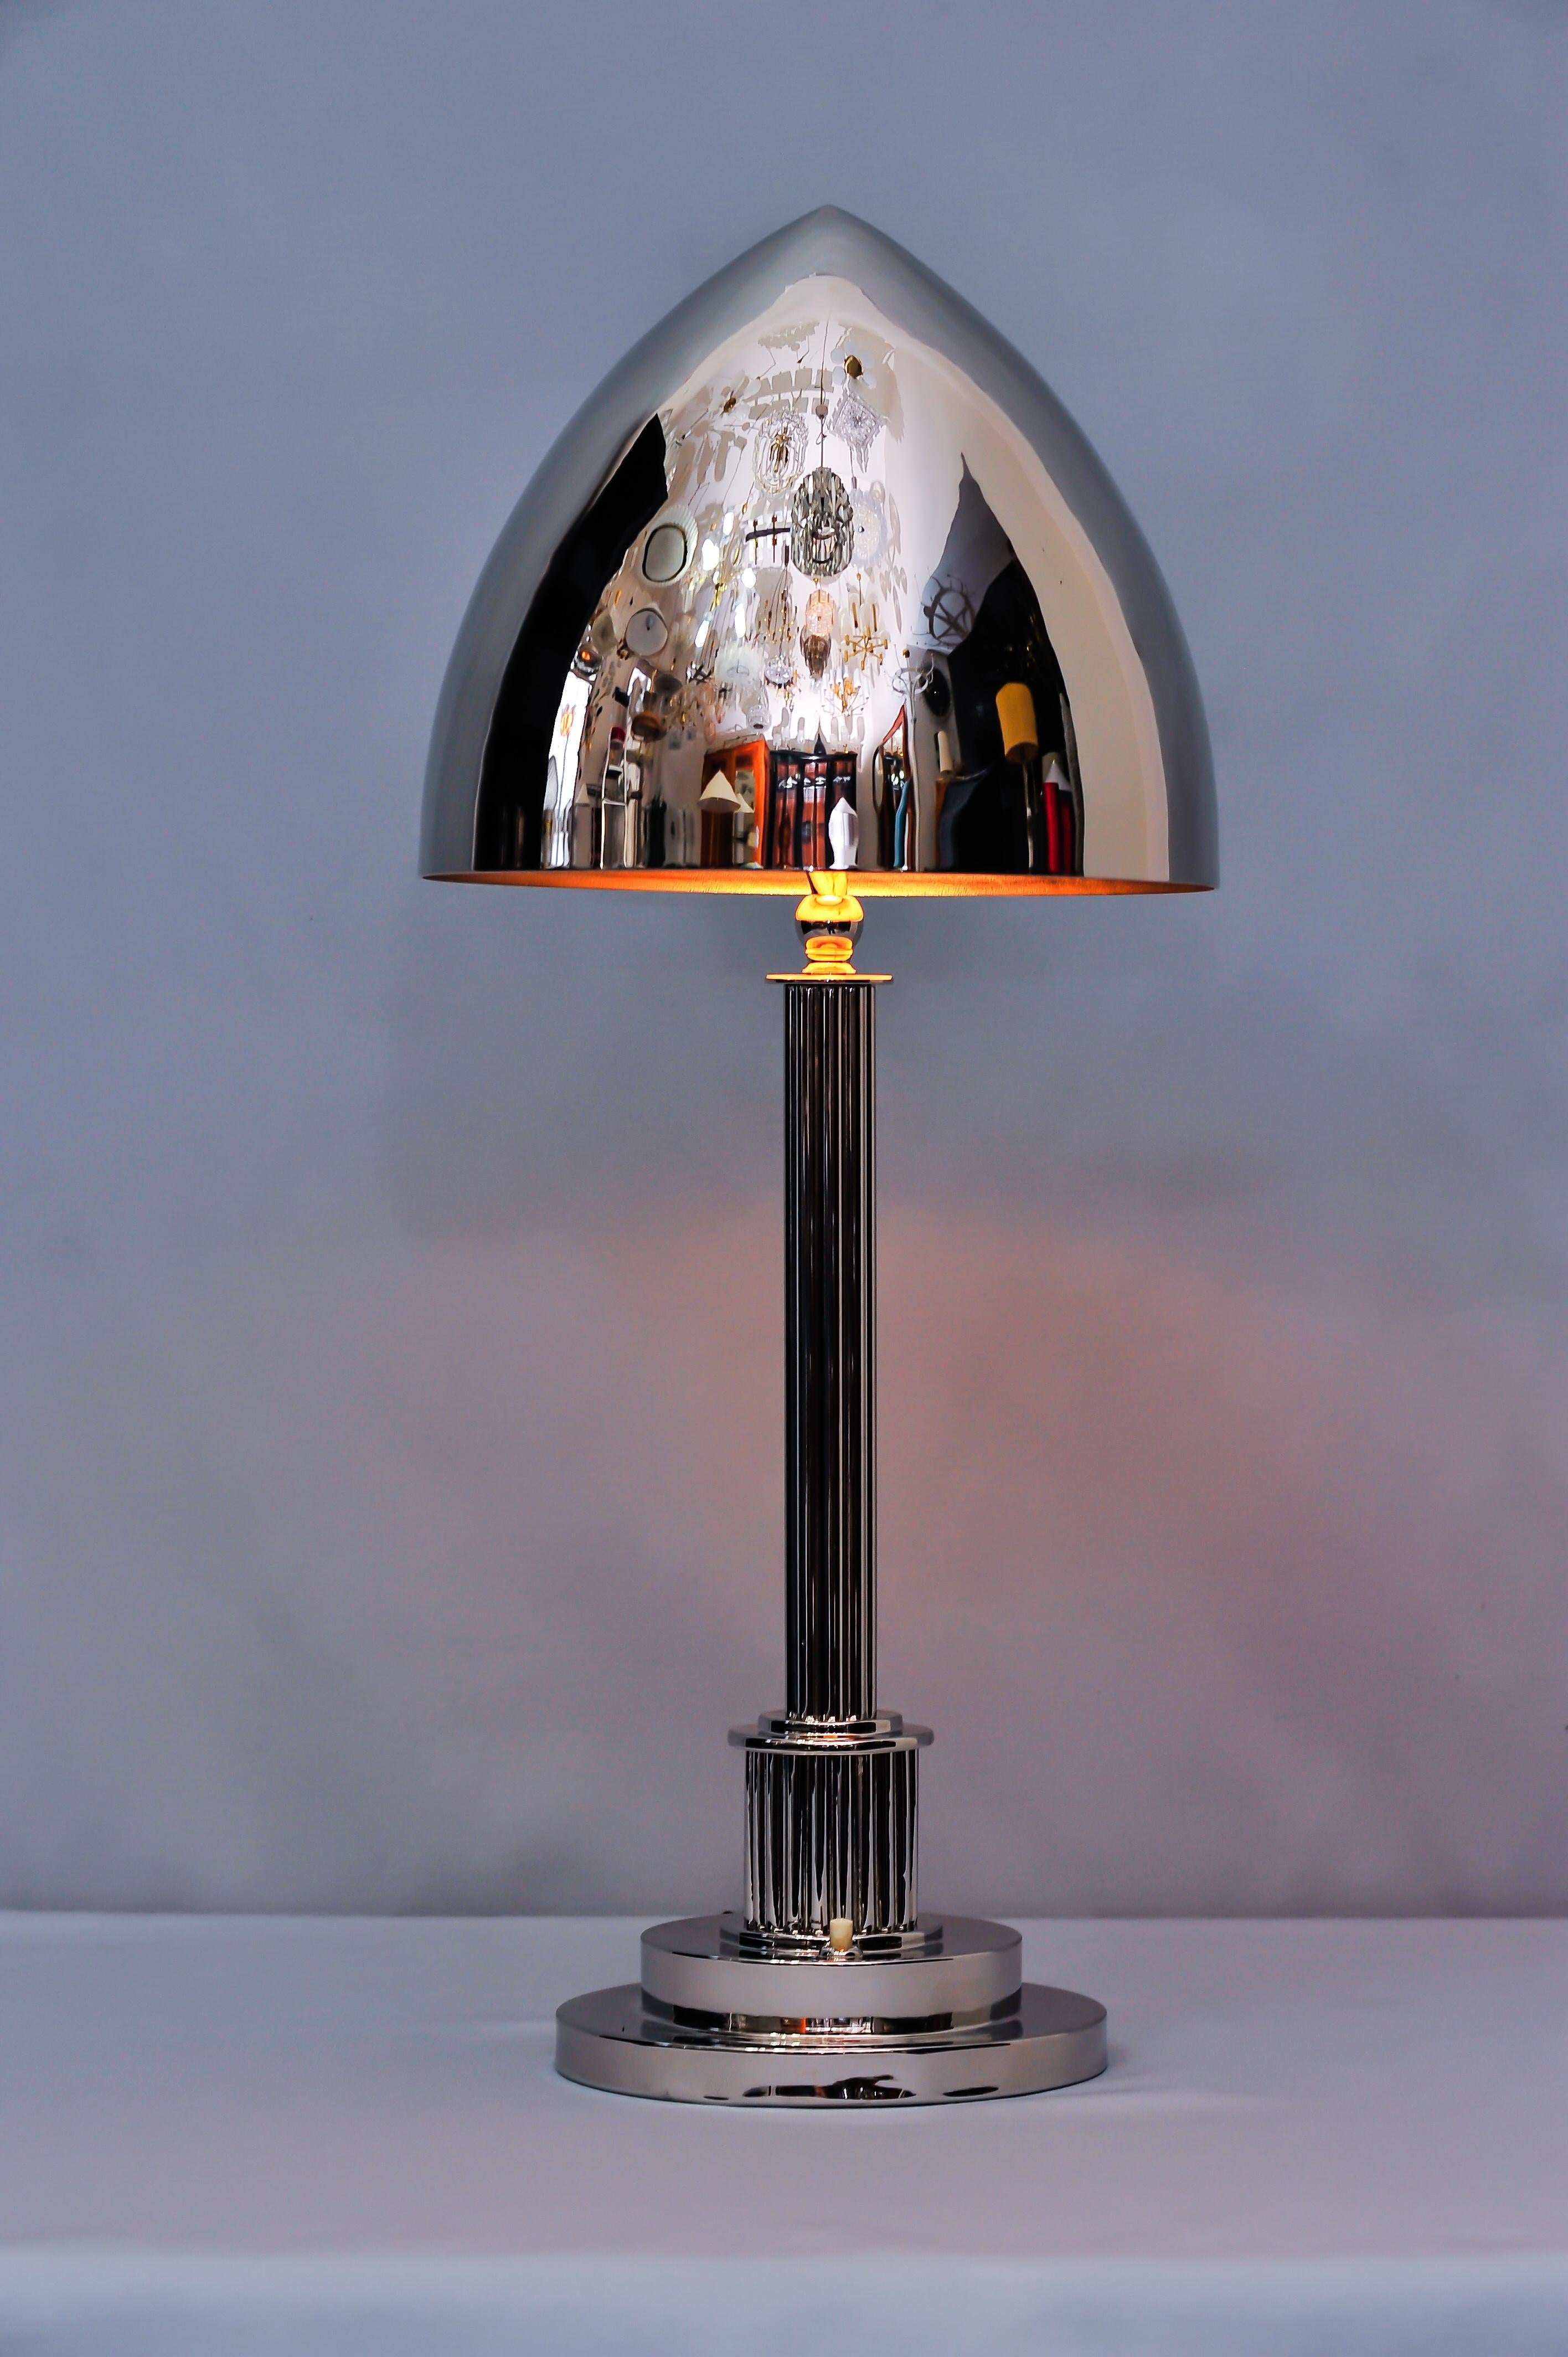 Art Deco table lamp, circa 1920s
Nickel plated.